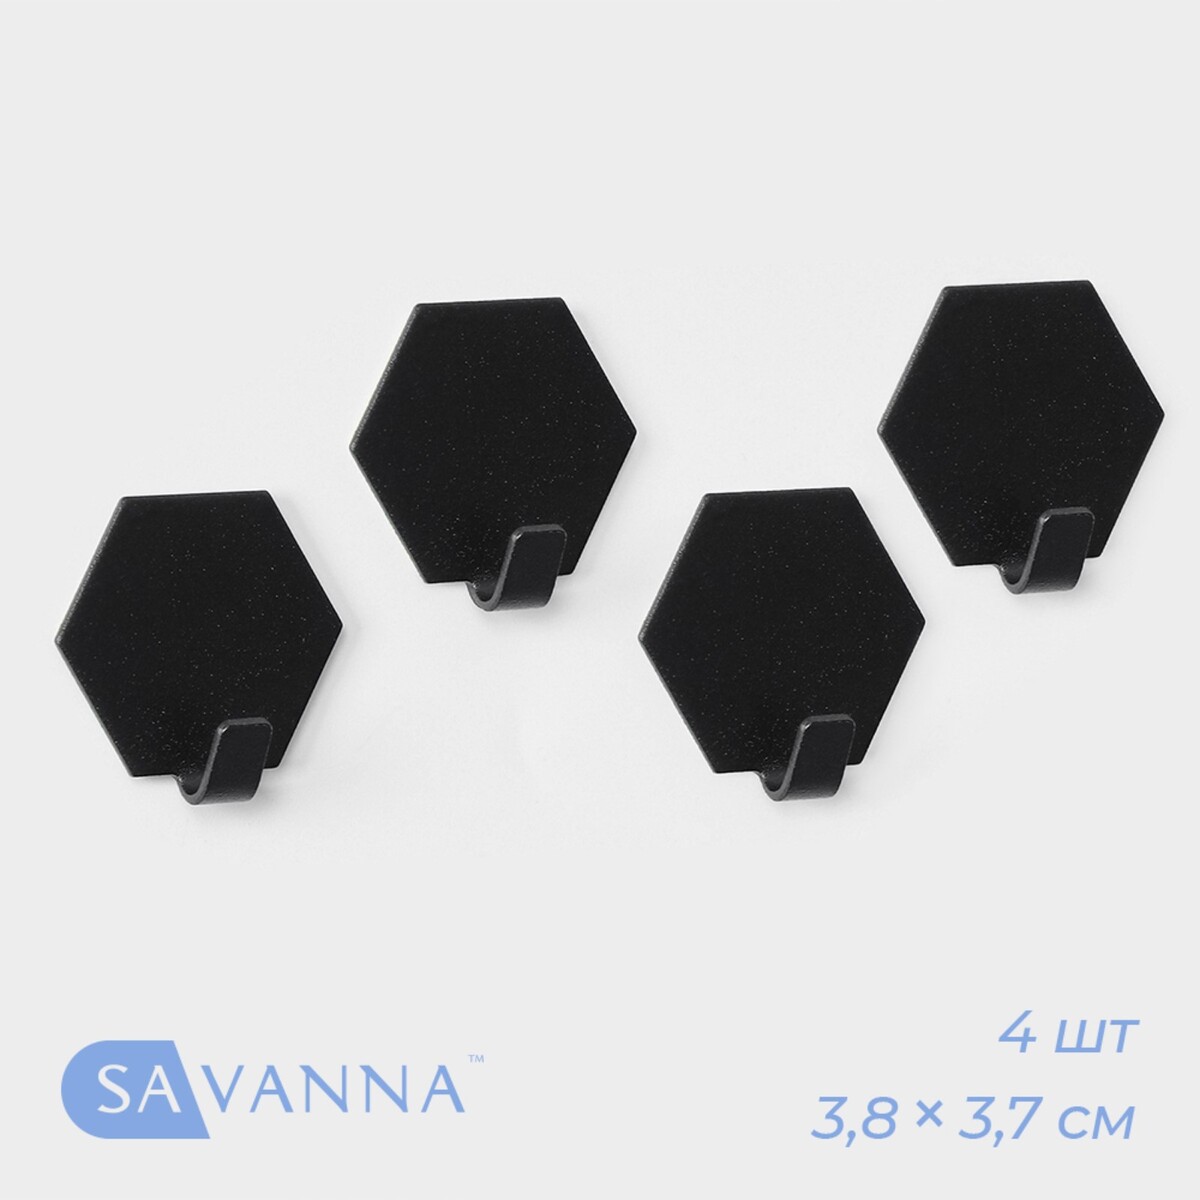     savanna black loft gear, 4 ,  2 